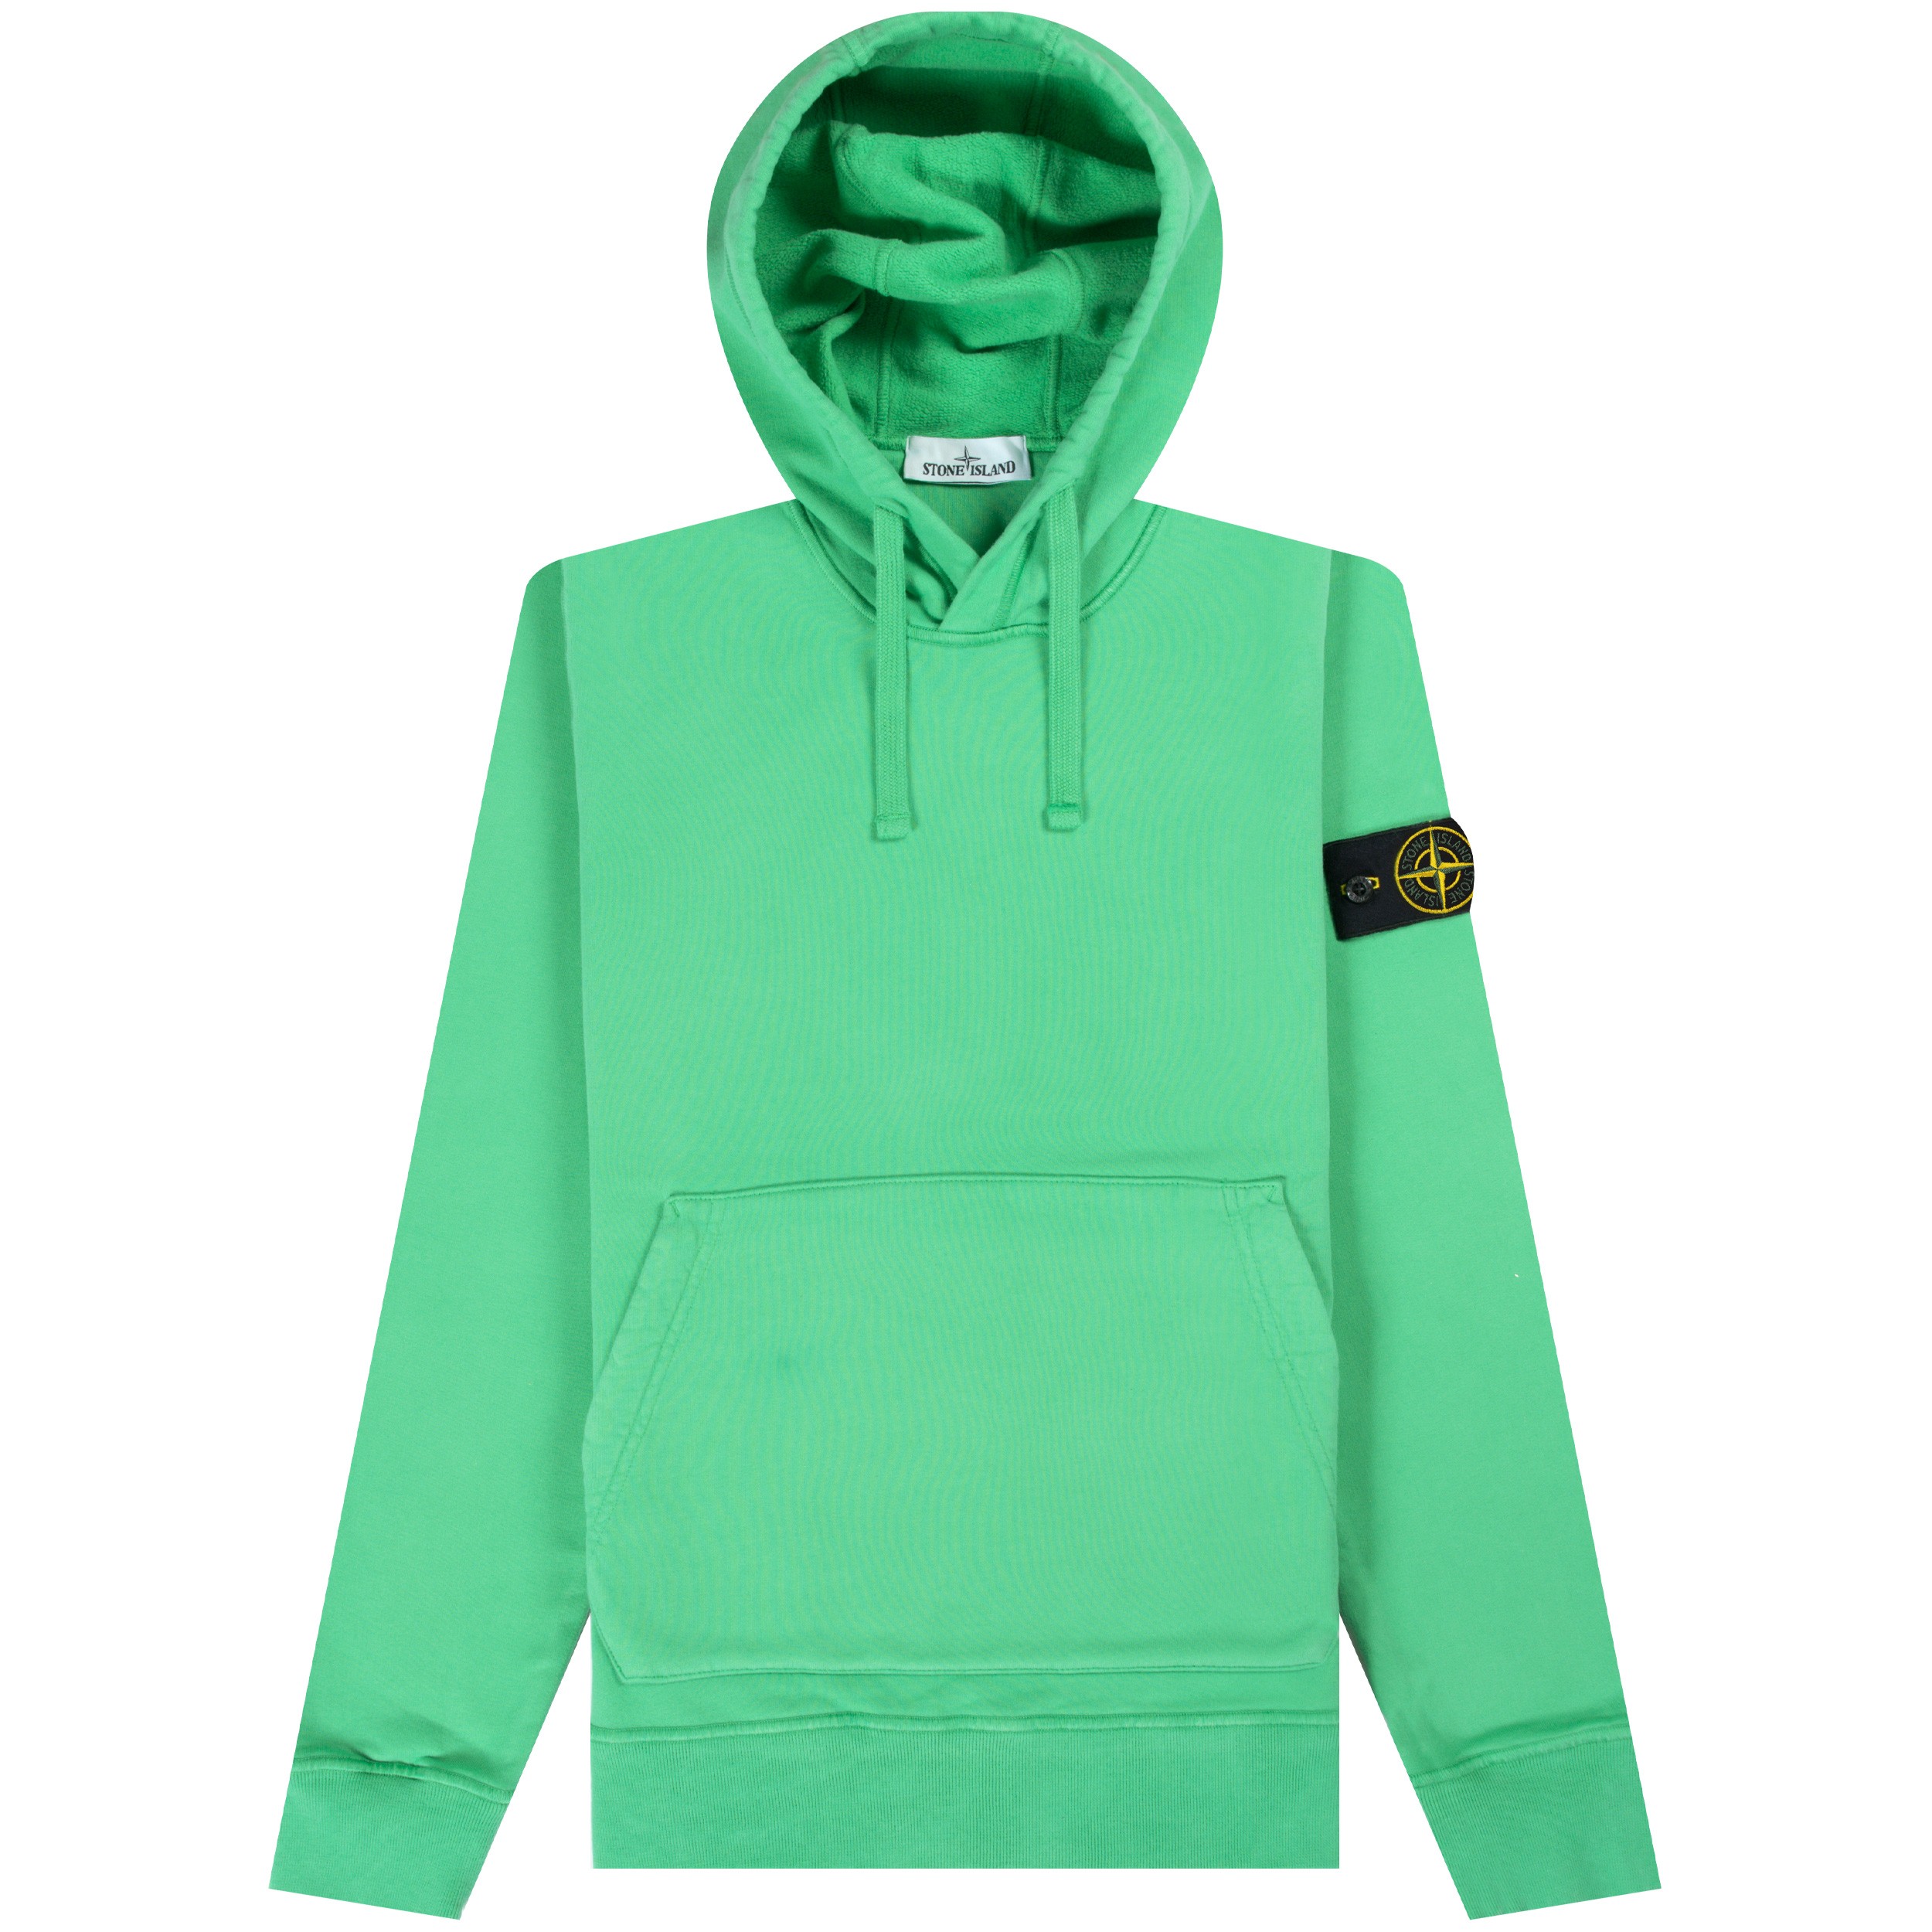 Stone Island 'Garment Dyed' Popover Hooded Sweatshirt Bright Green